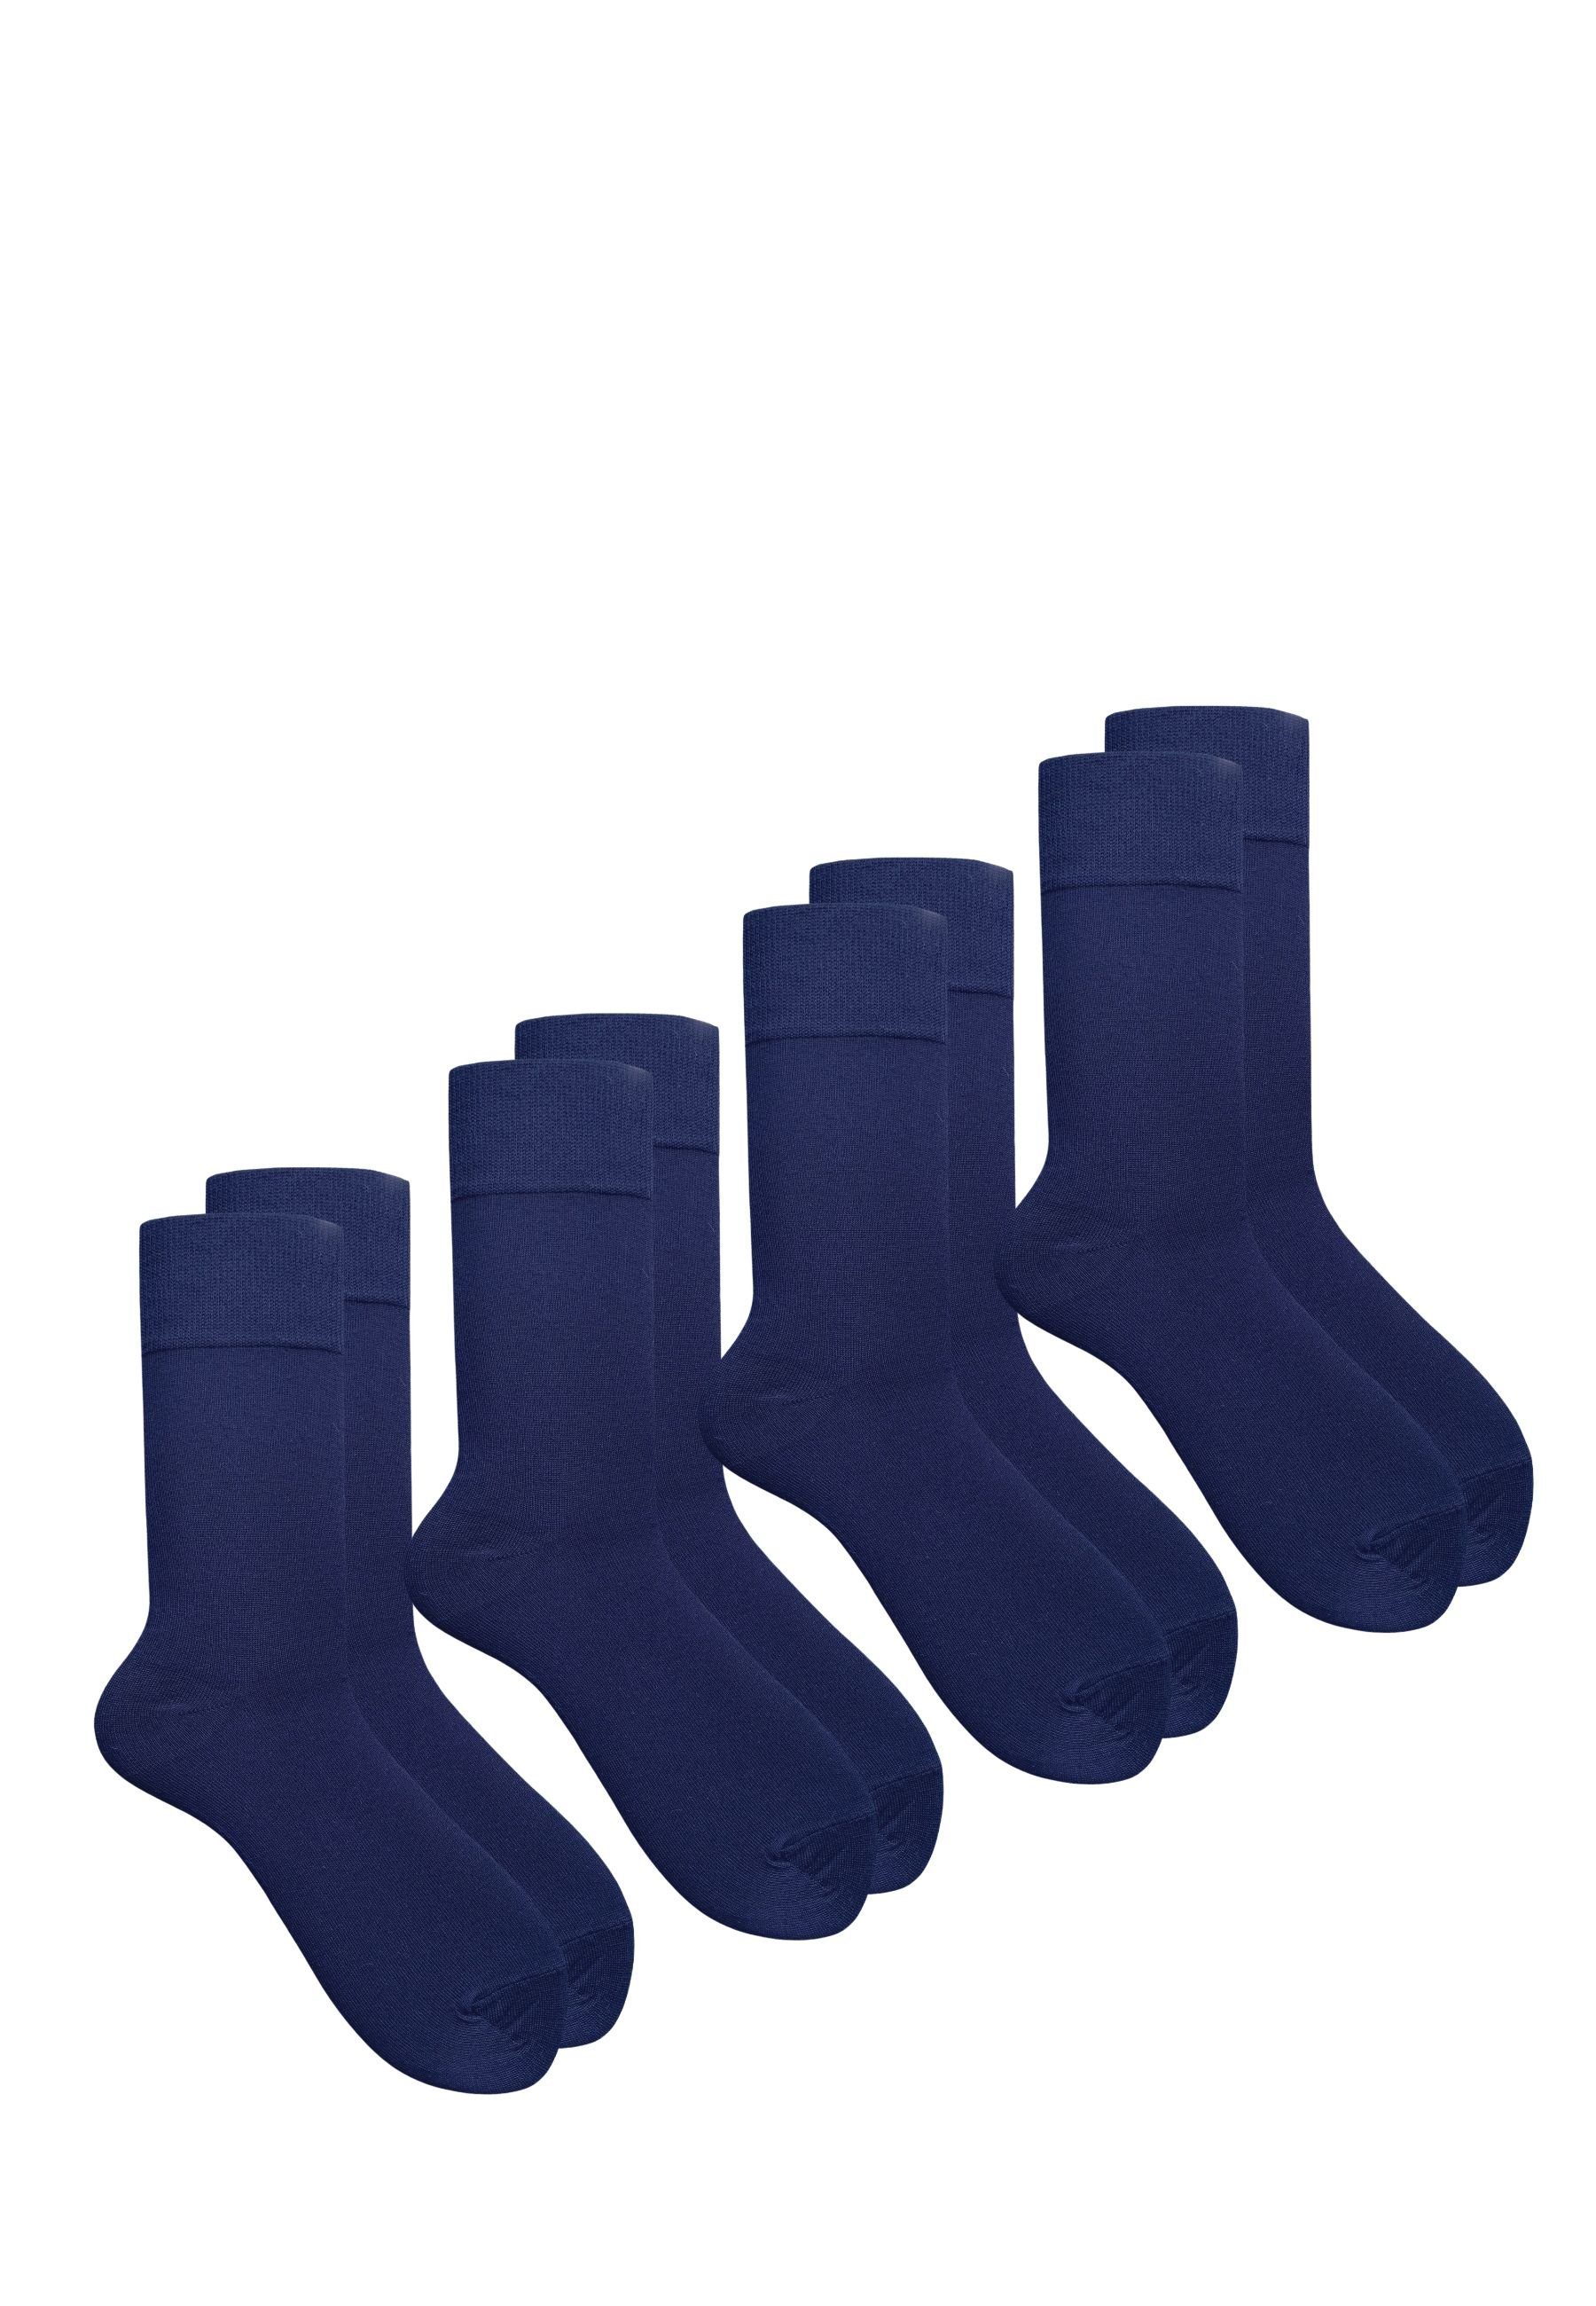 HESE SOX Basicsocken Socken 4 PAAR ELEGANT BAUMWOLLE BLAU | Socken